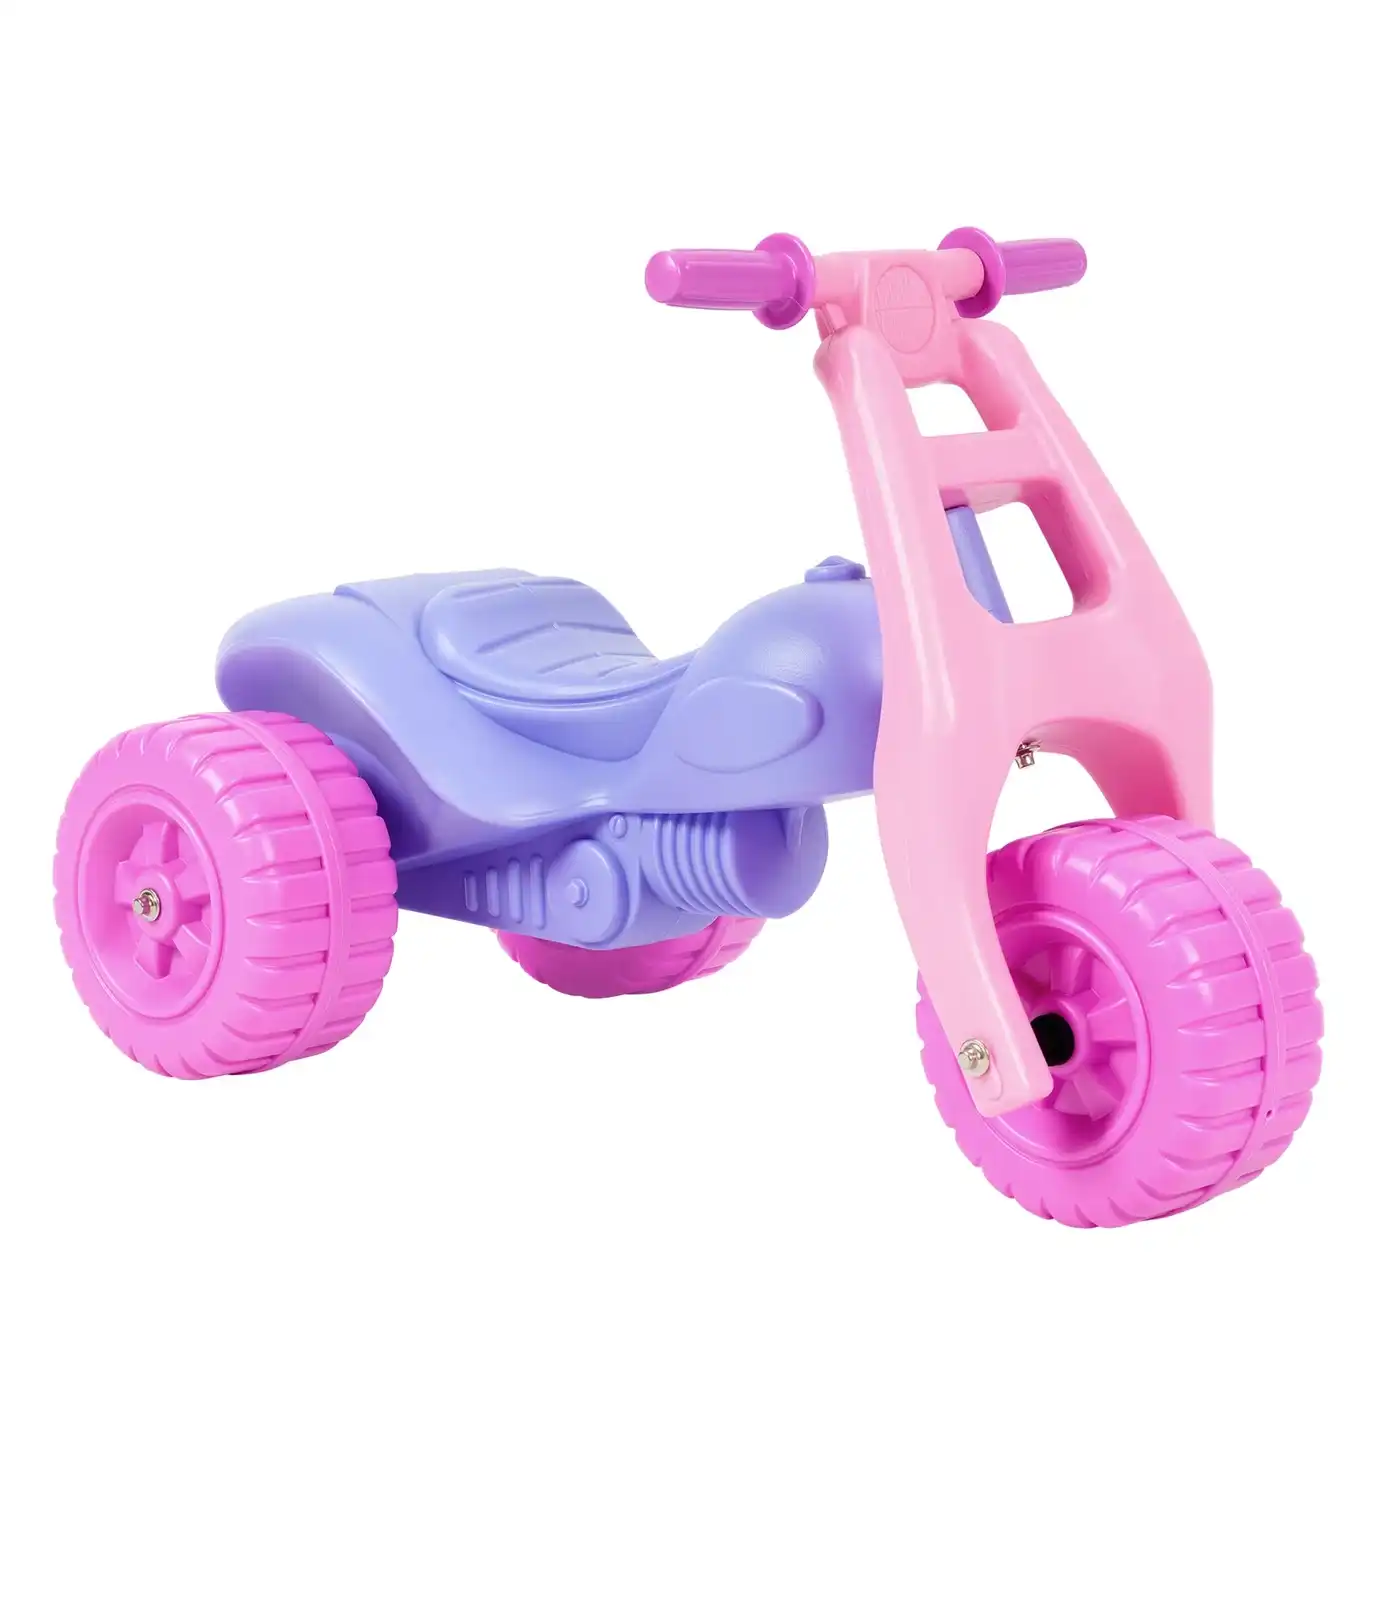 Cyclops ATV Scrambler Ride On - Pink